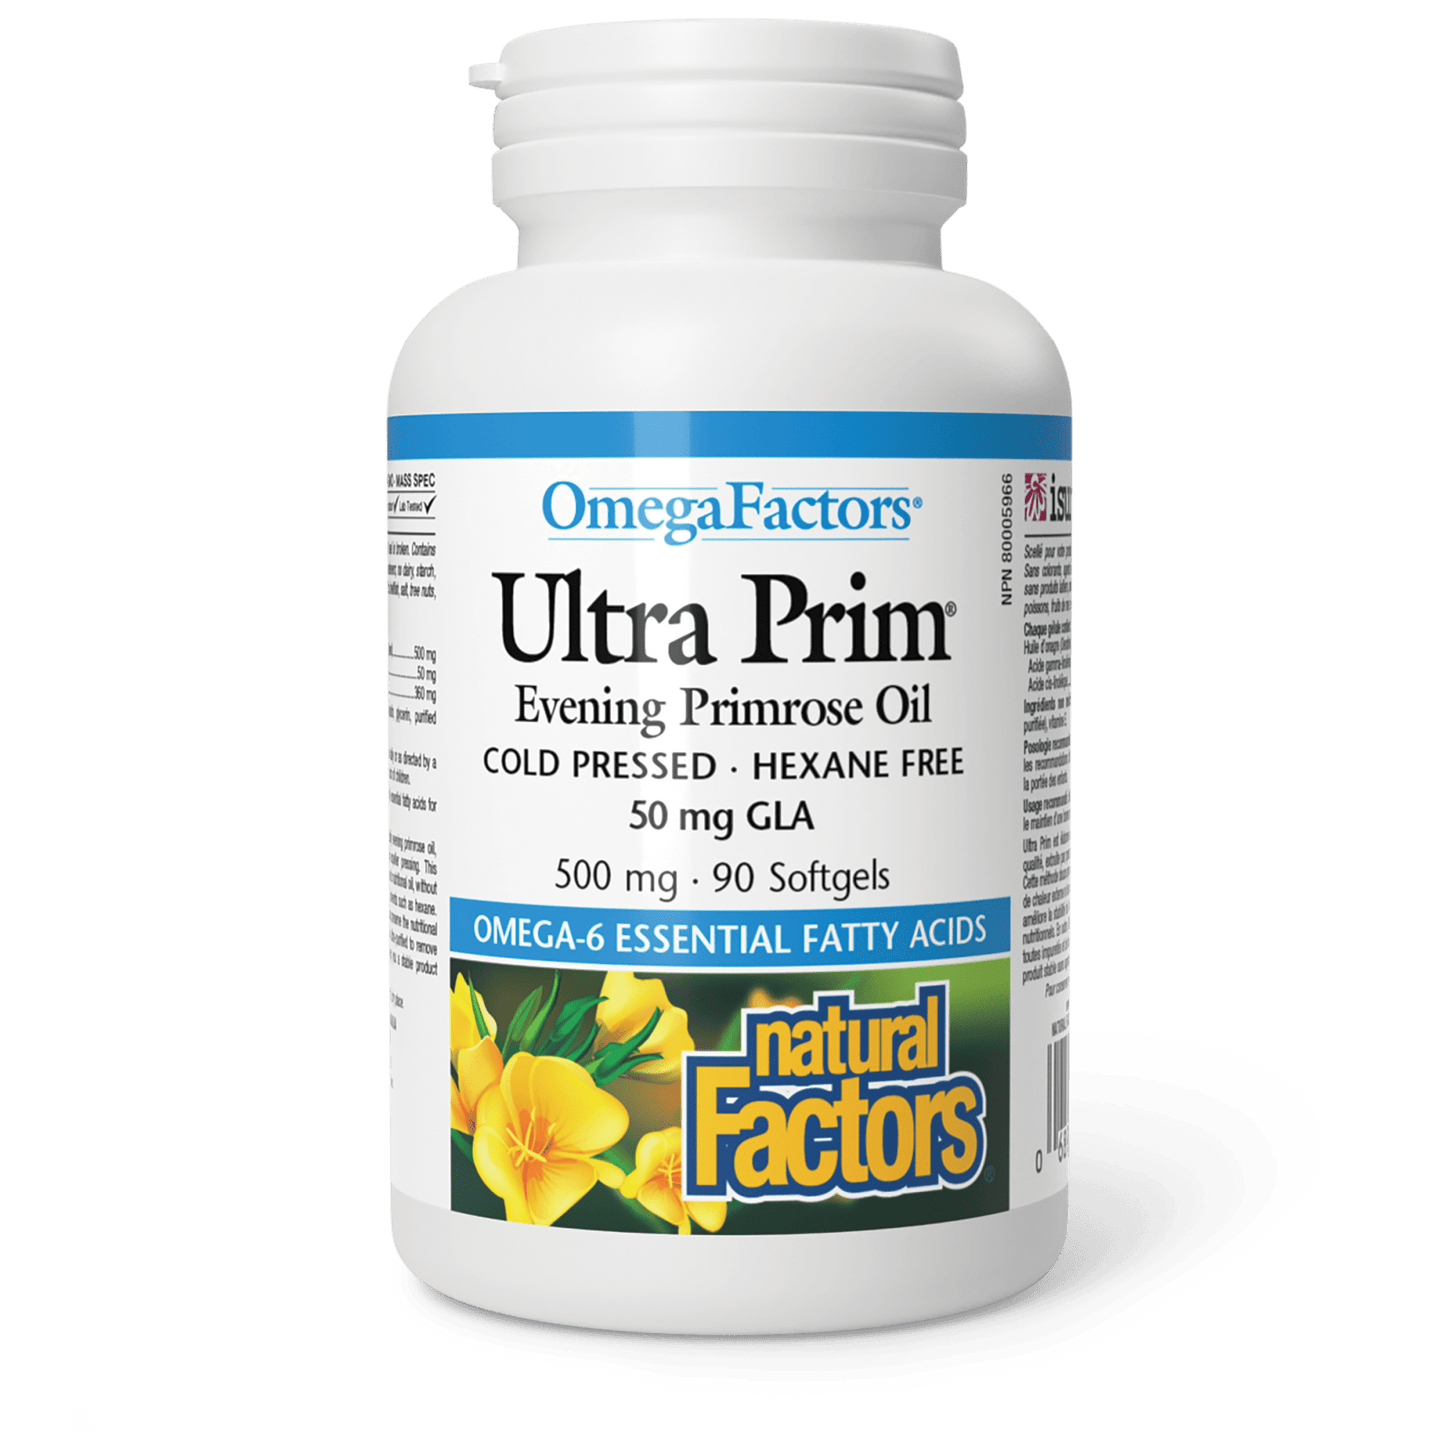 Ultra Prim Evening Primrose Oil 500 mg, OmegaFactors, Natural Factors|v|image|2351